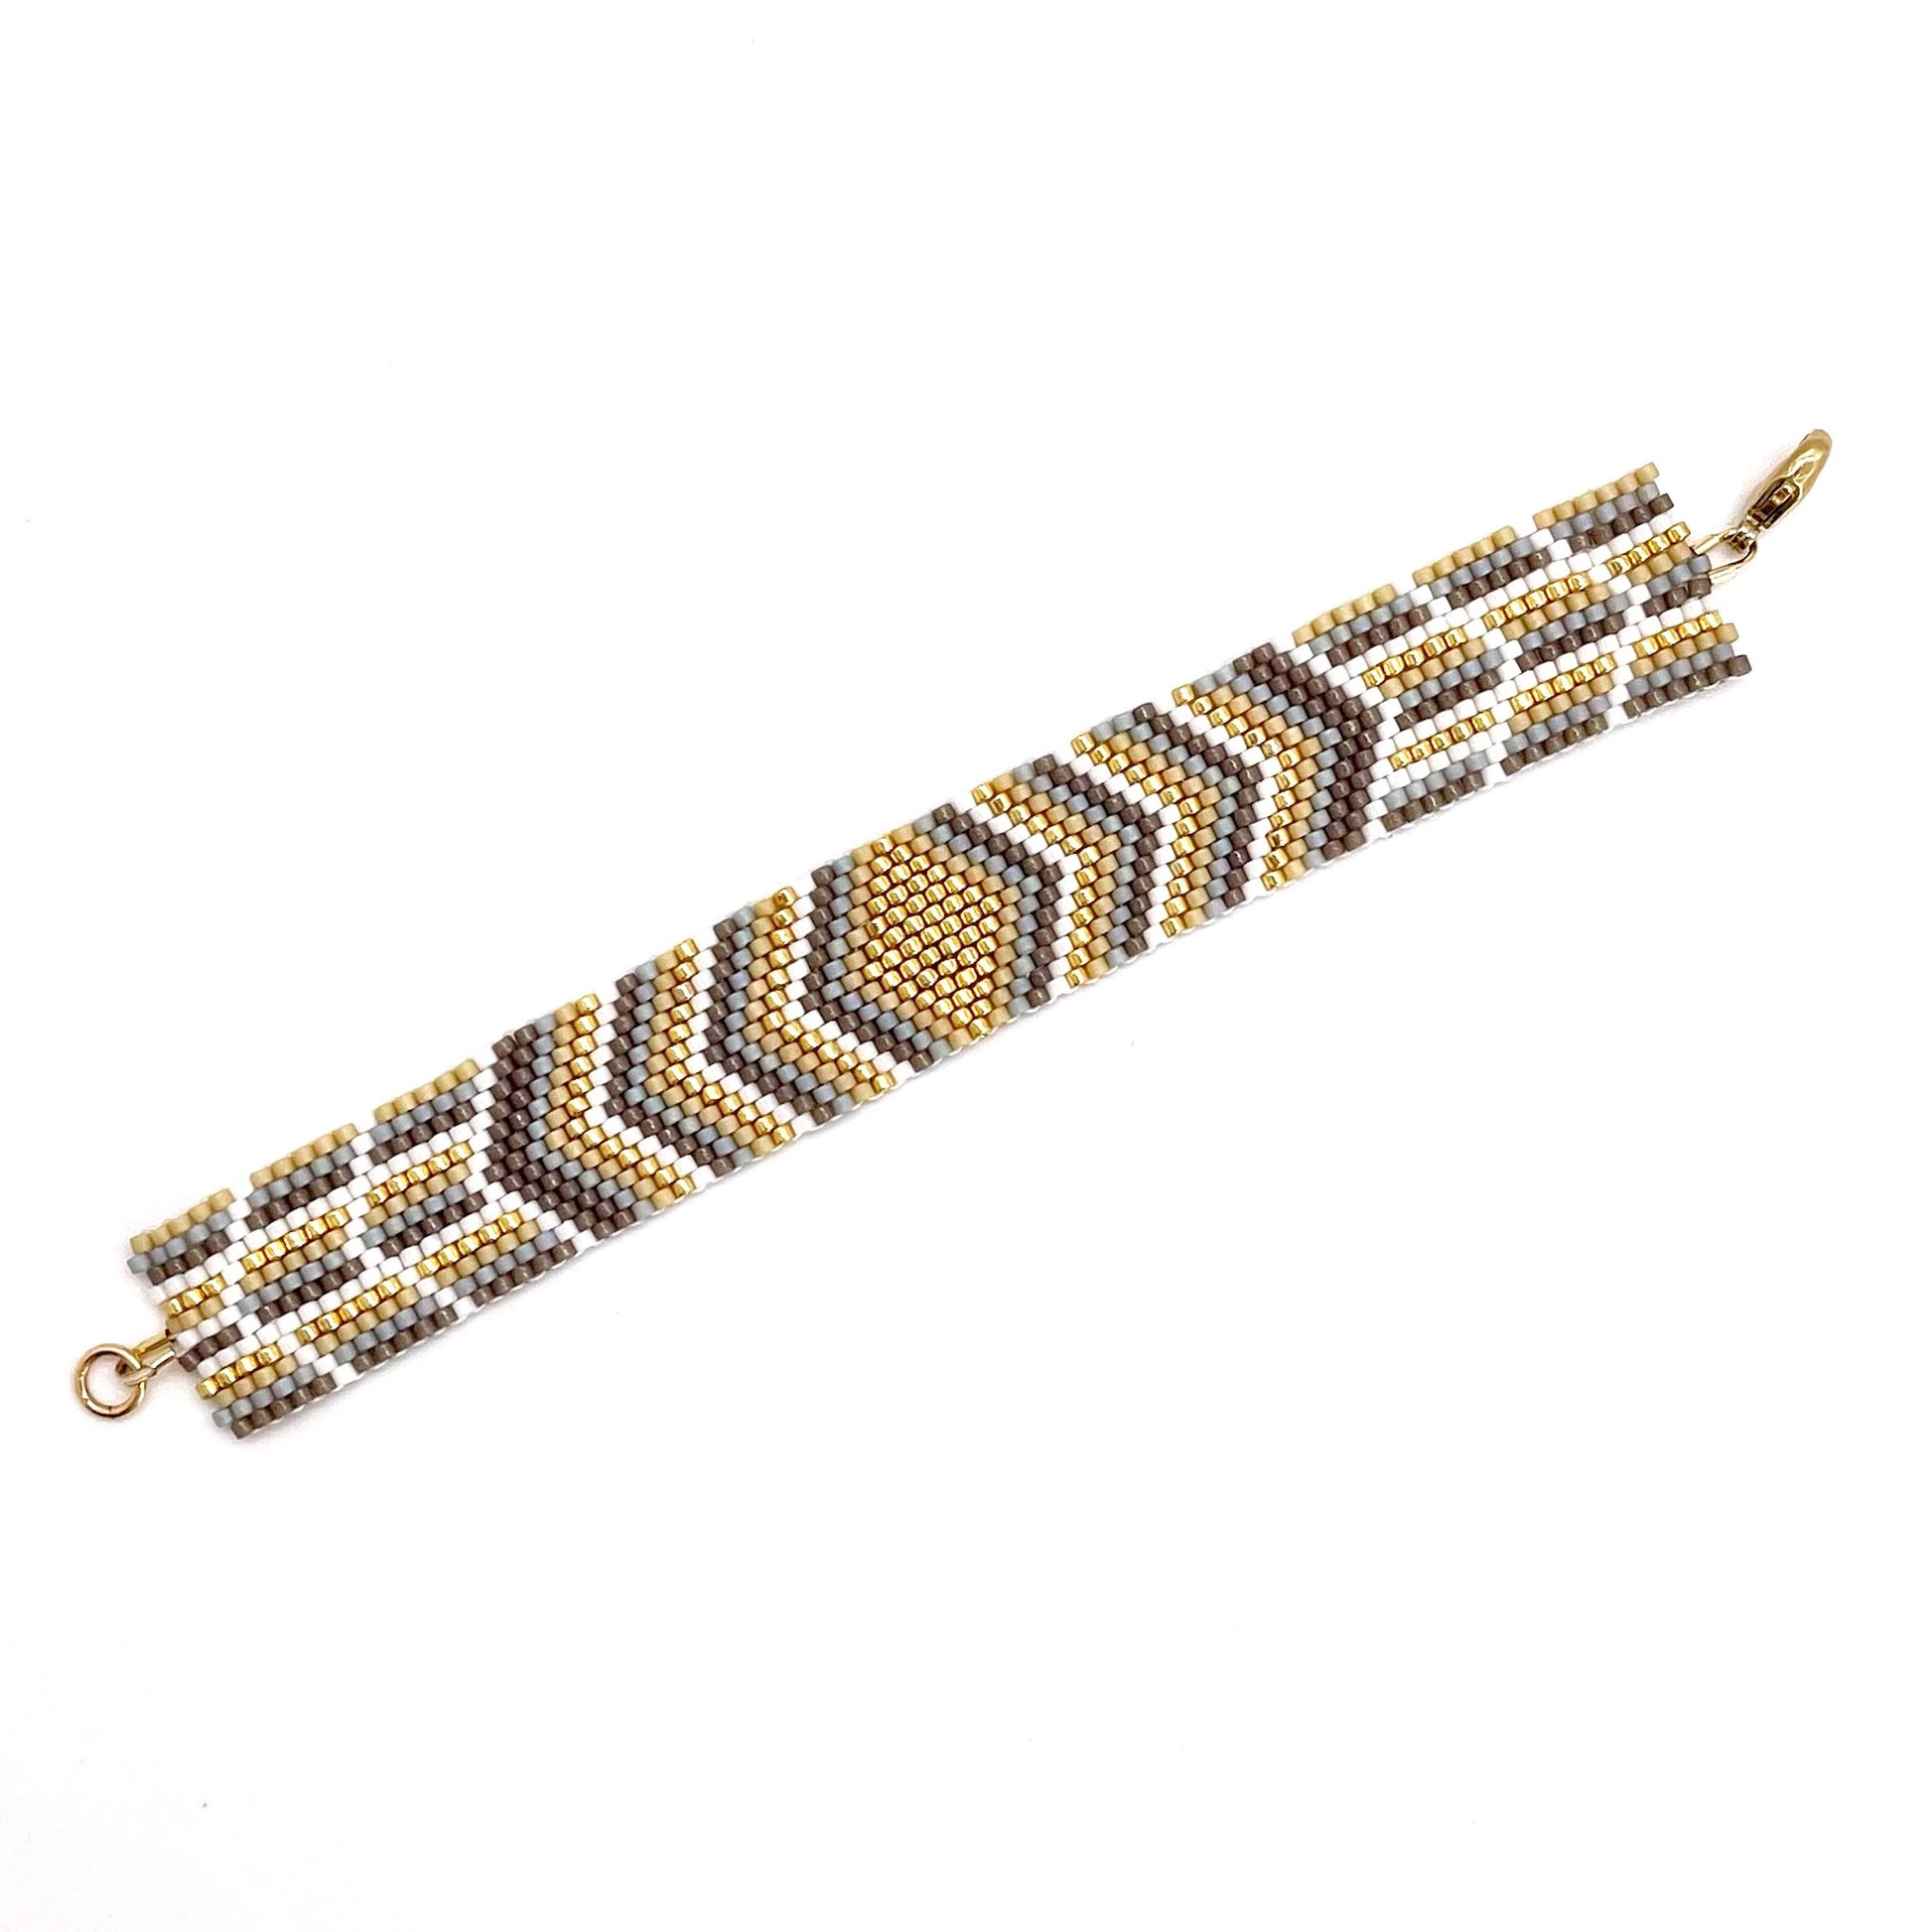 Diamond and chevron woven beaded miyuki bracelet in gold, taupe, and white peyote pattern.